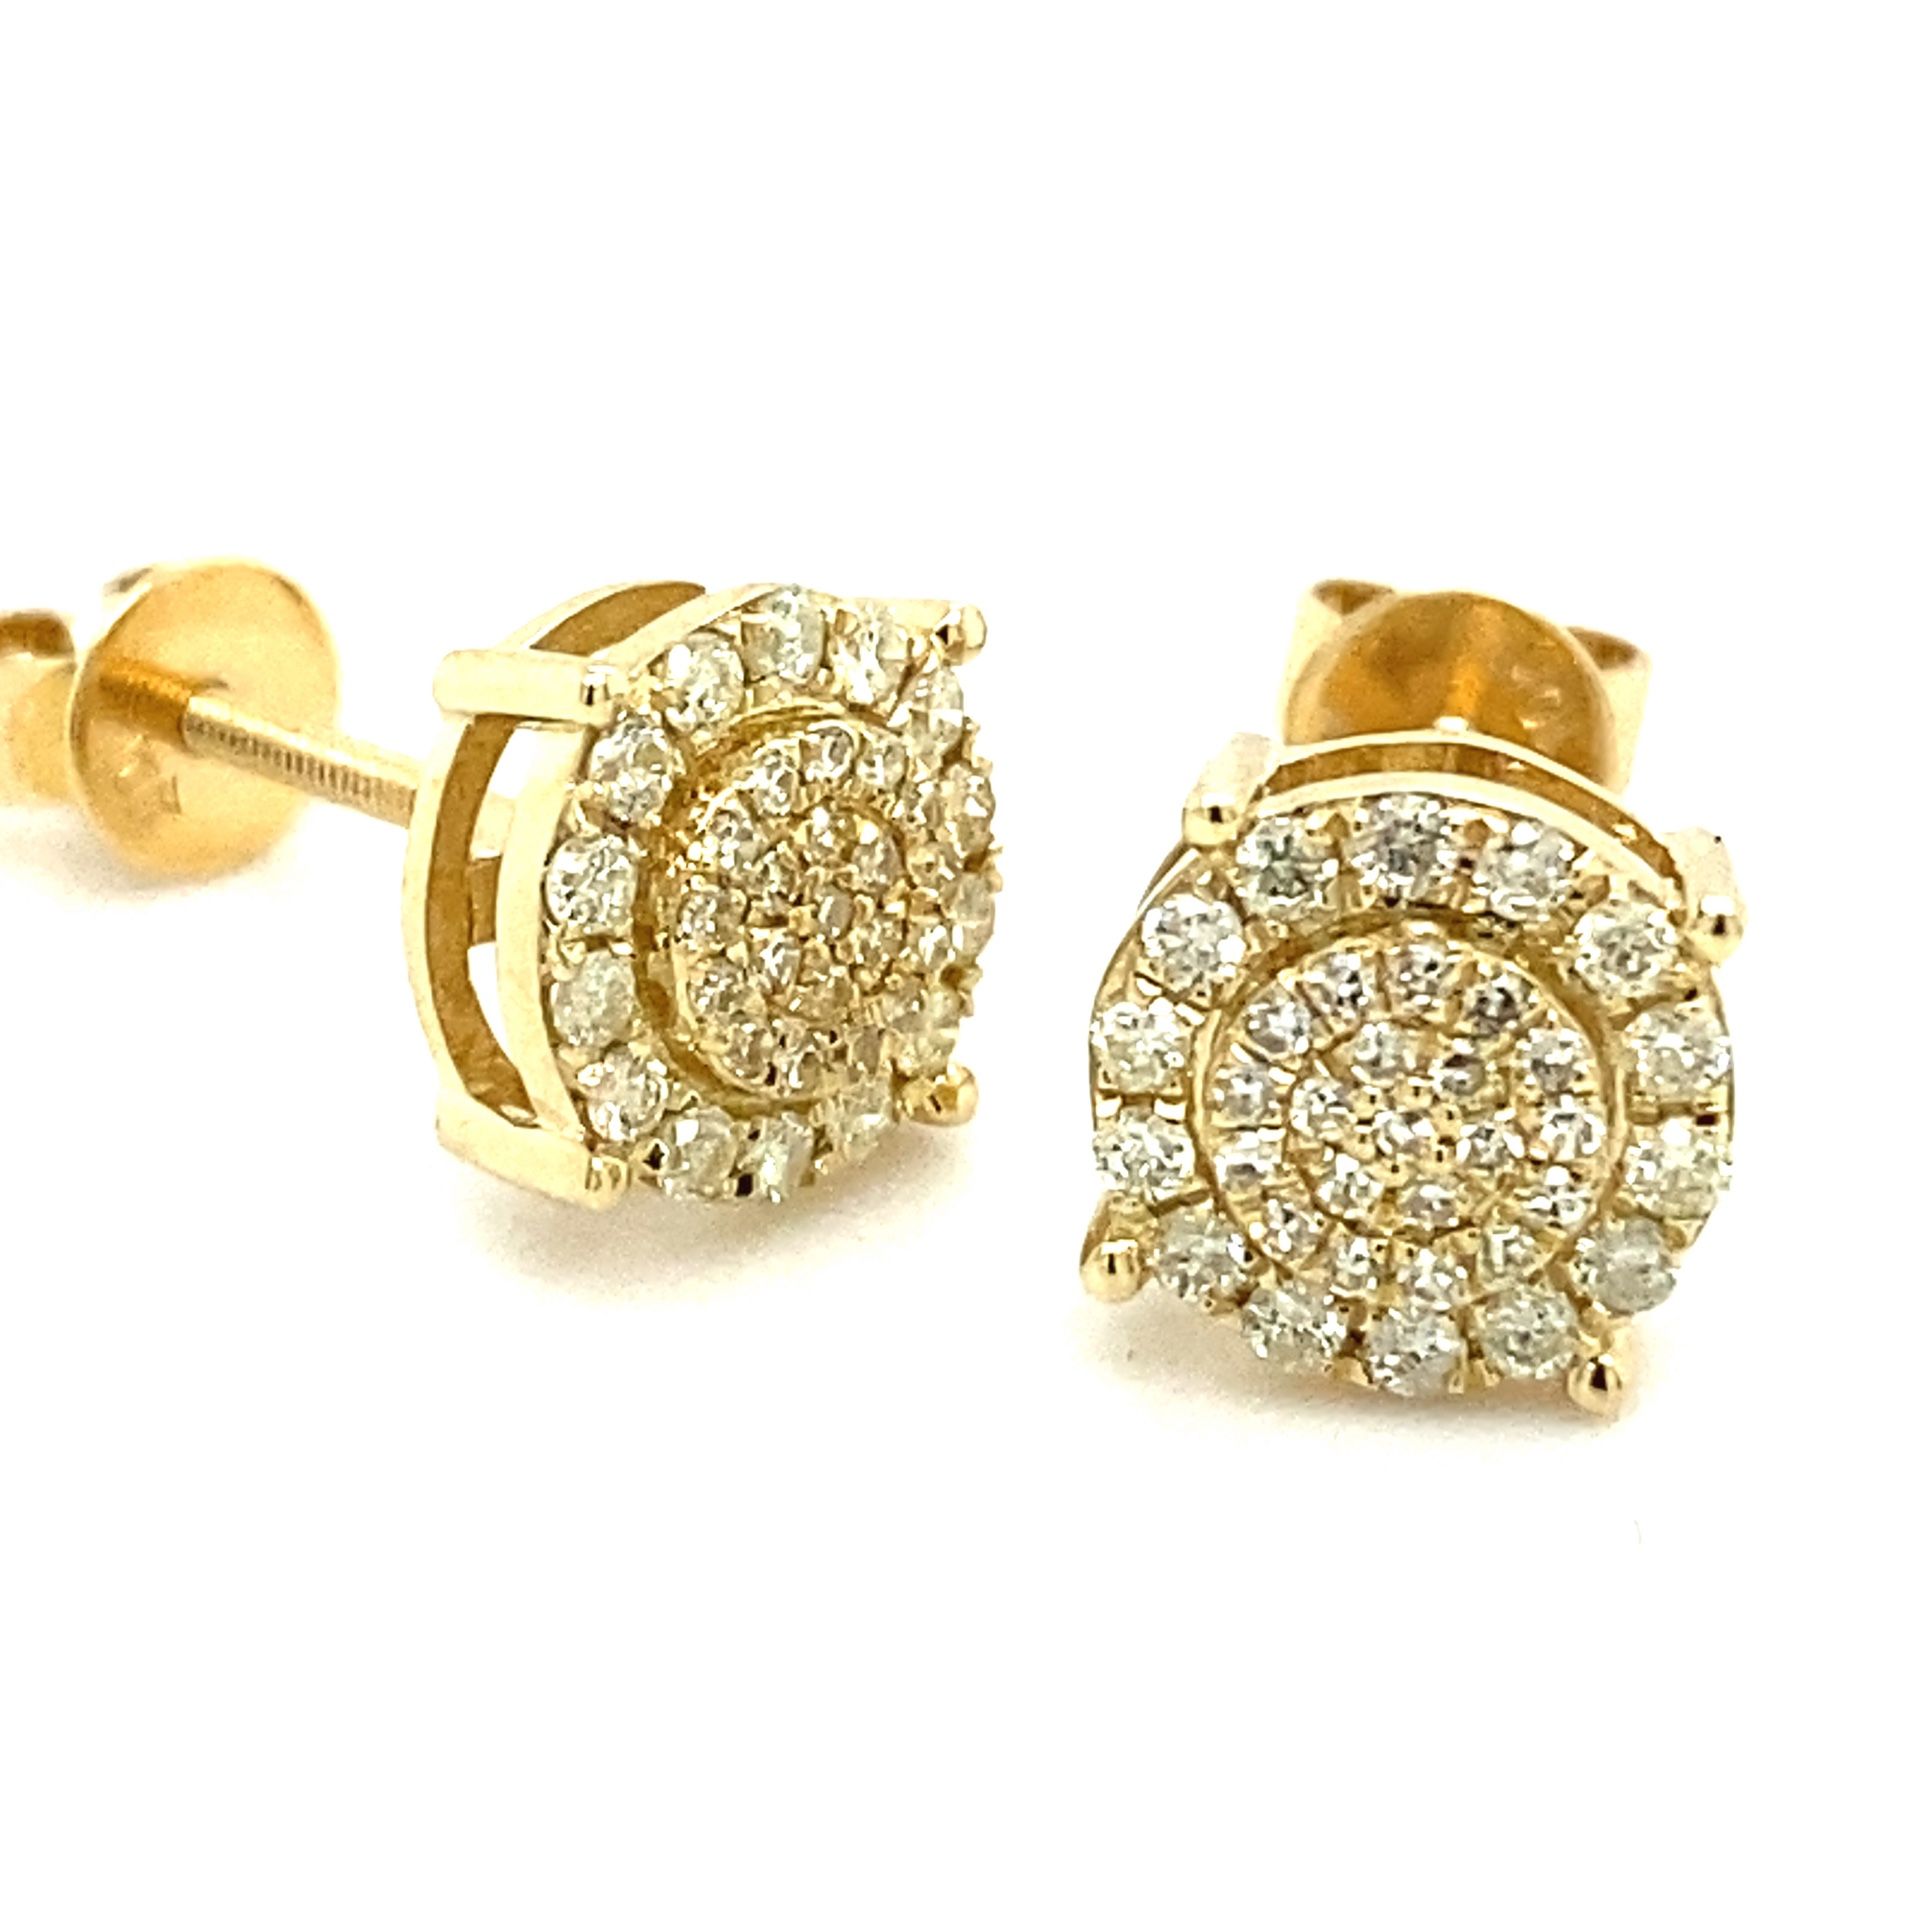 10k Gold Round Diamond Cluster Earrings .36ctw 133622 17 